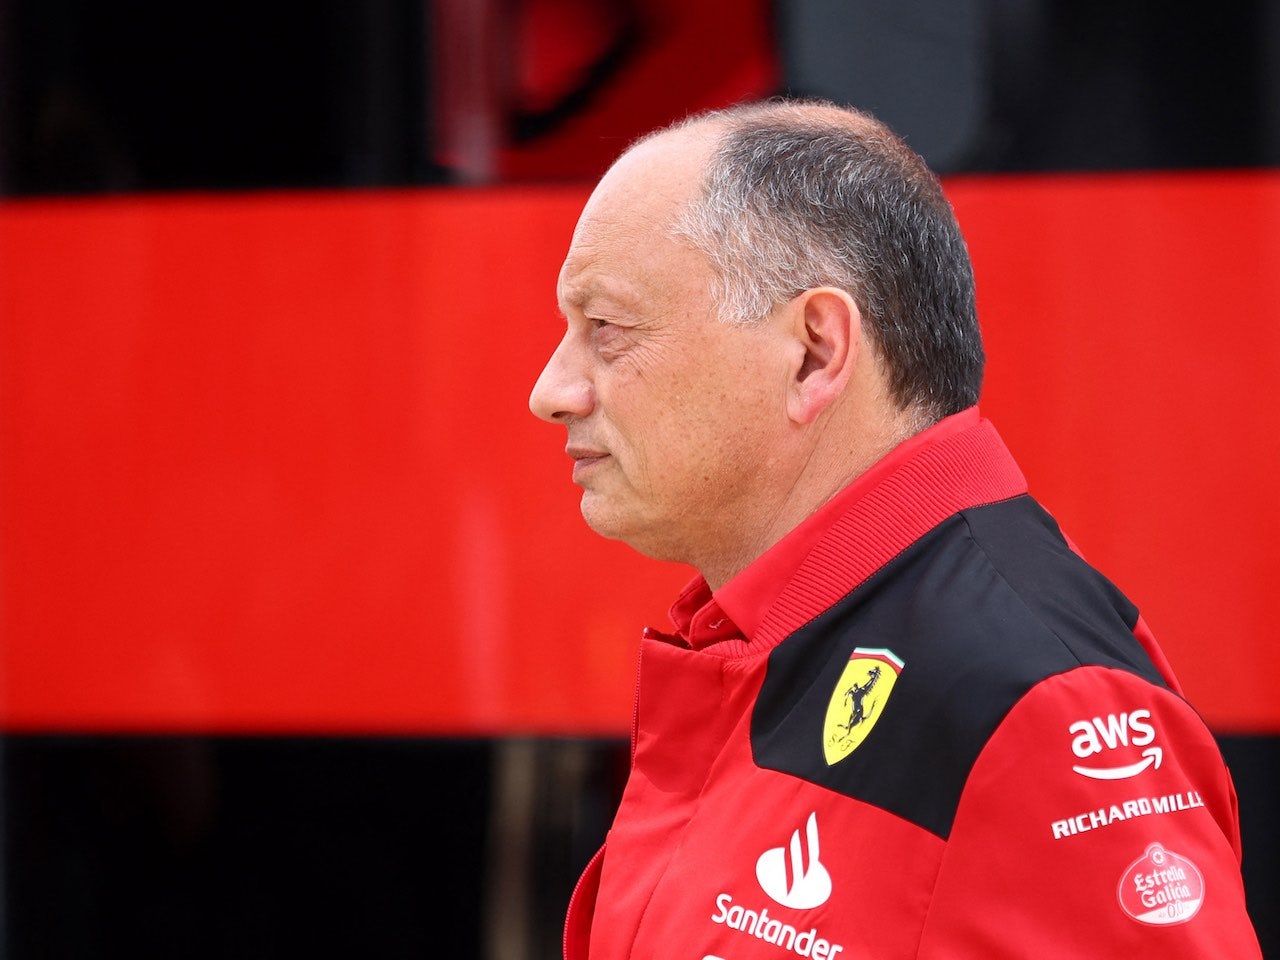 Ferrari drivers can 'do better' - Vasseur